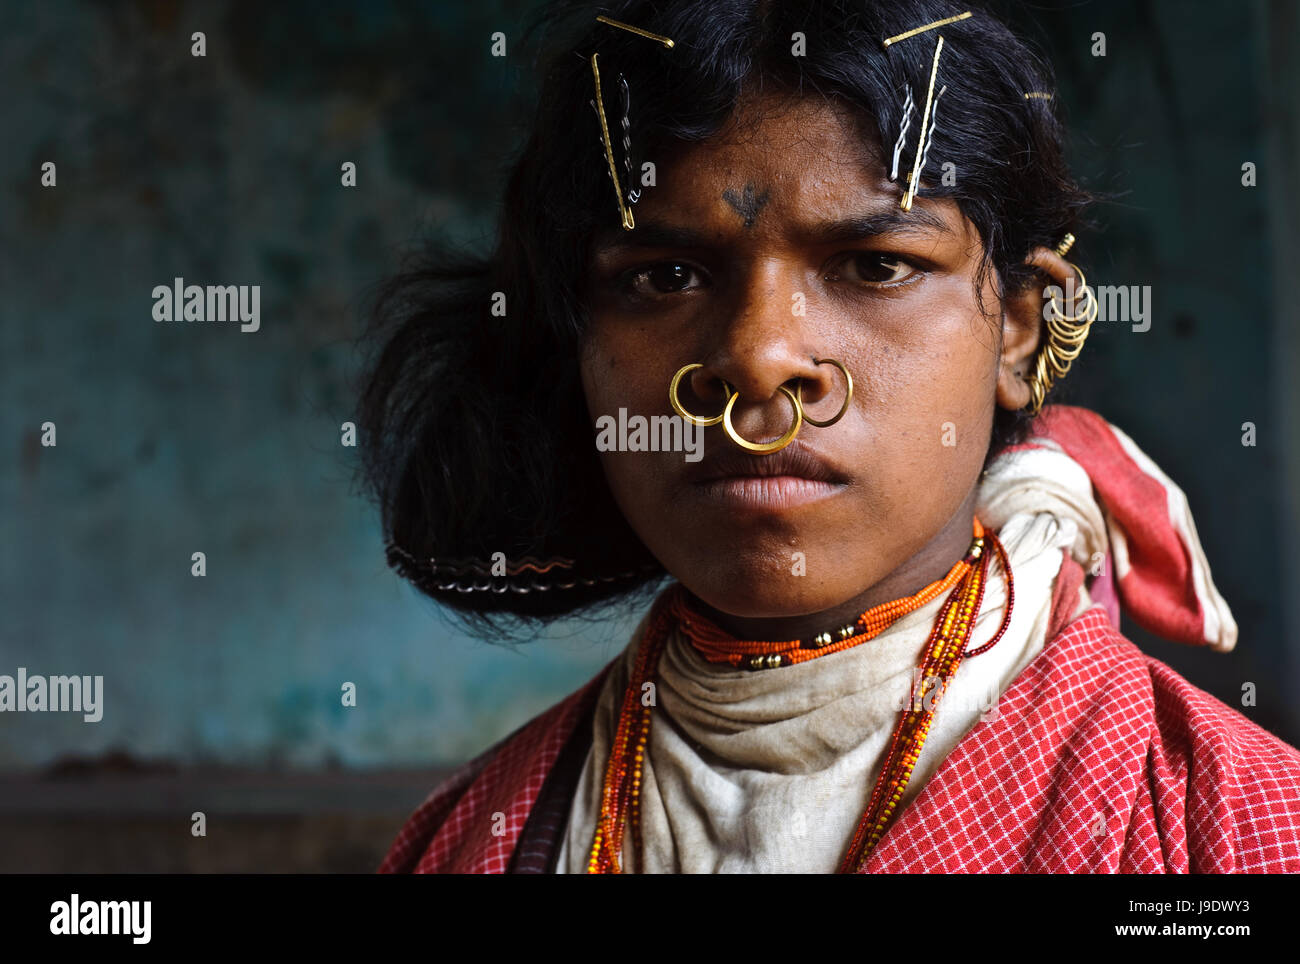 Girl from the Dongriya Kondh tribe ( India) Stock Photo